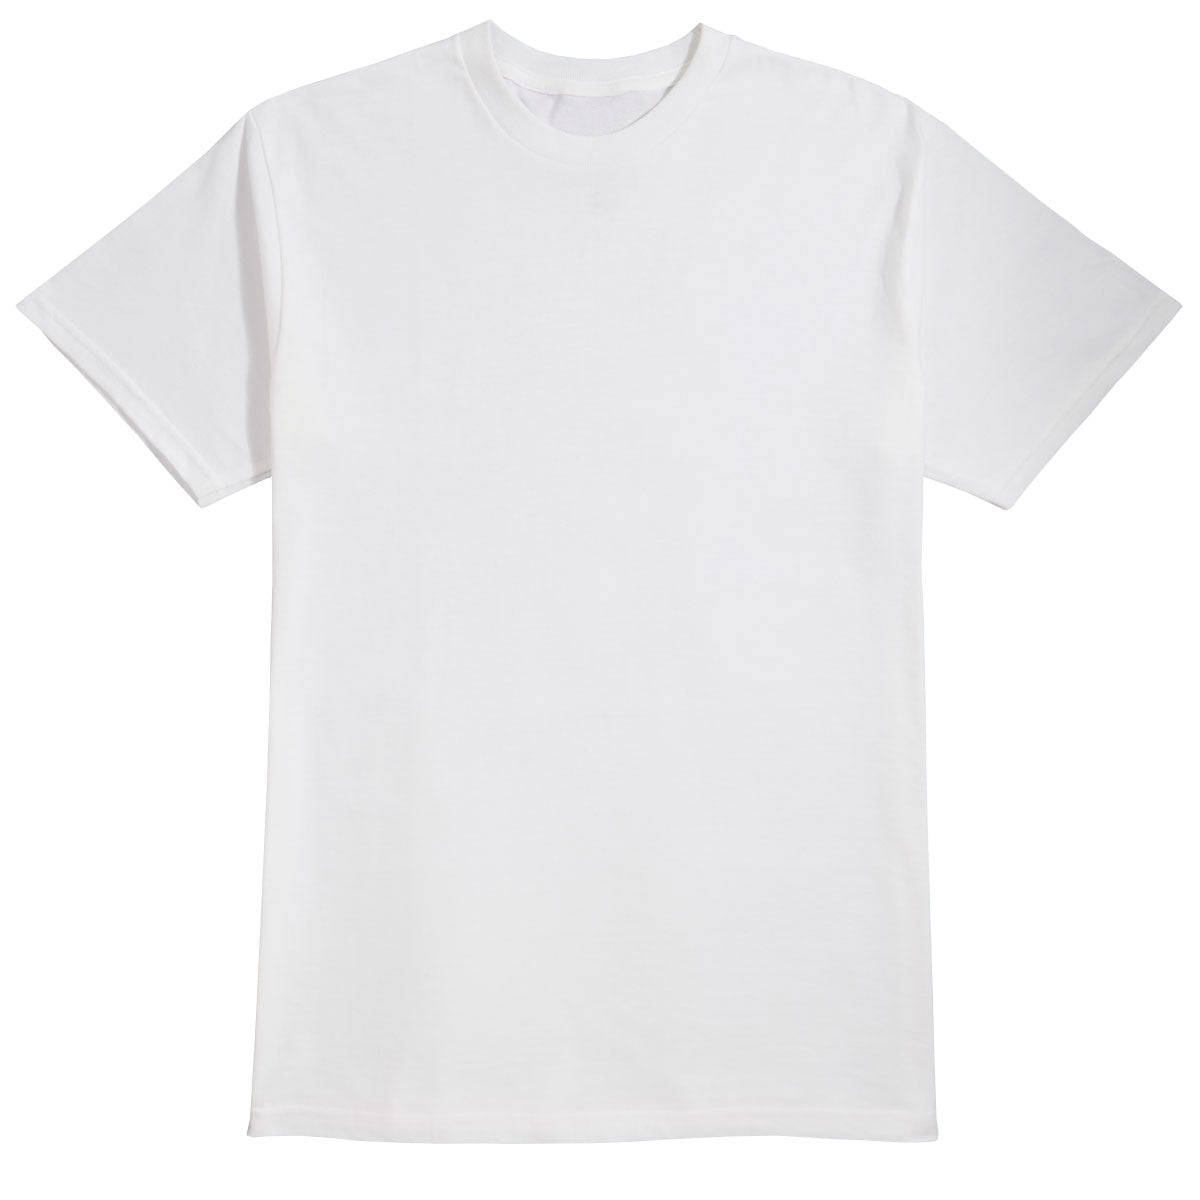 Converse Flash Sheet T-Shirt - White - MD image 1